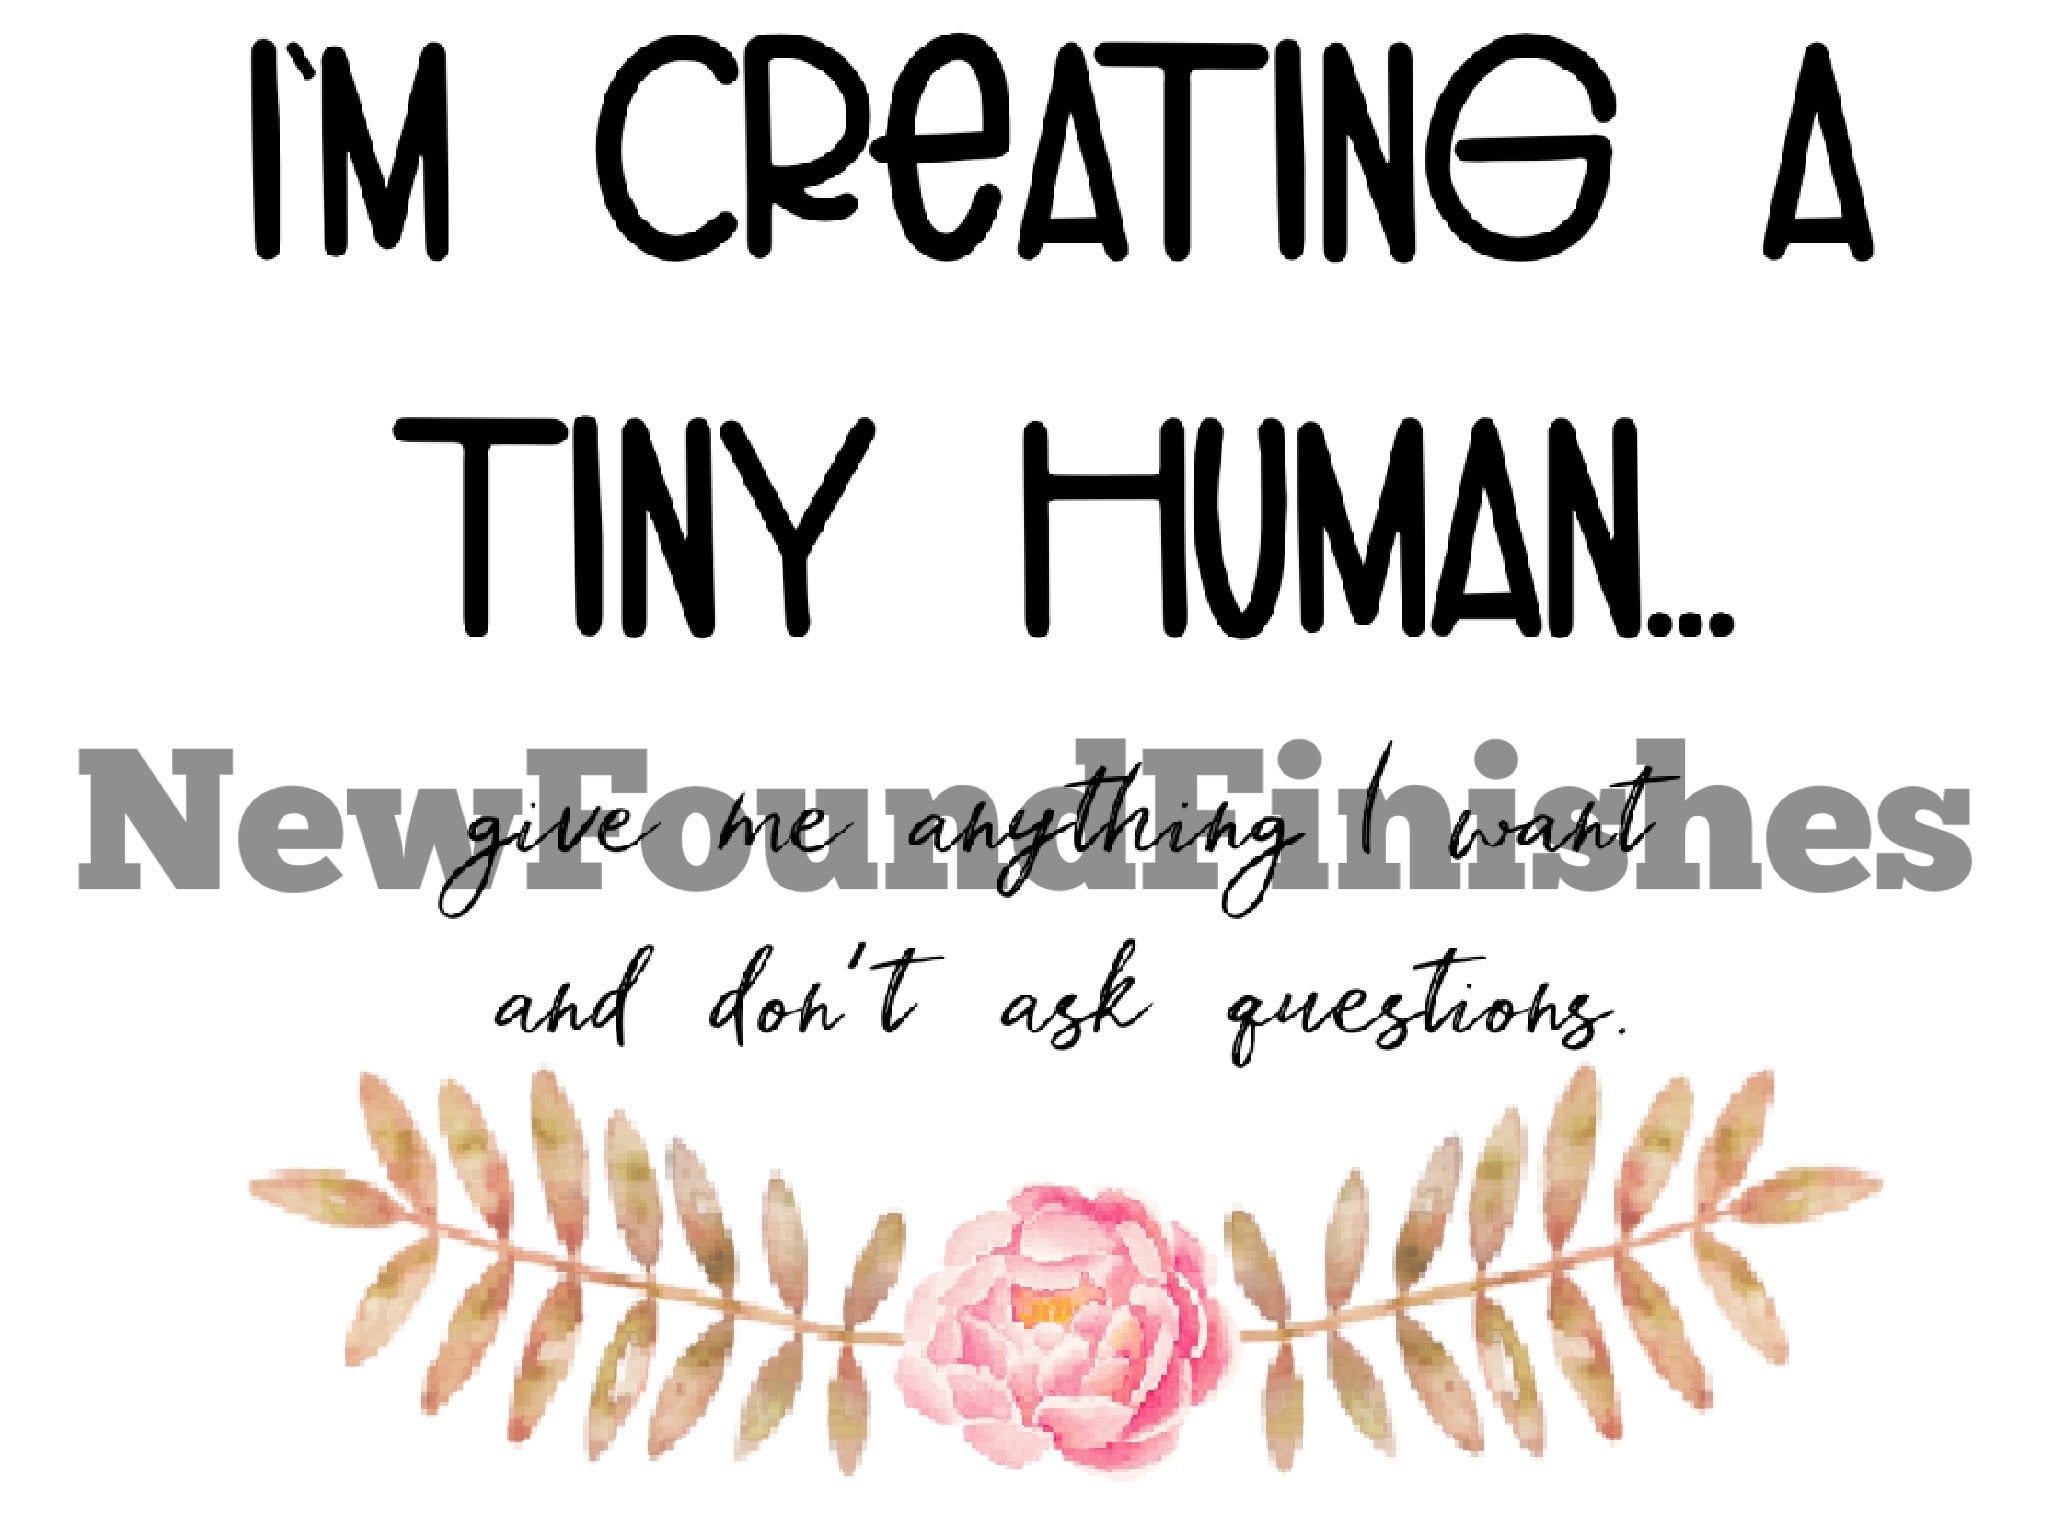 I’m creating tiny human